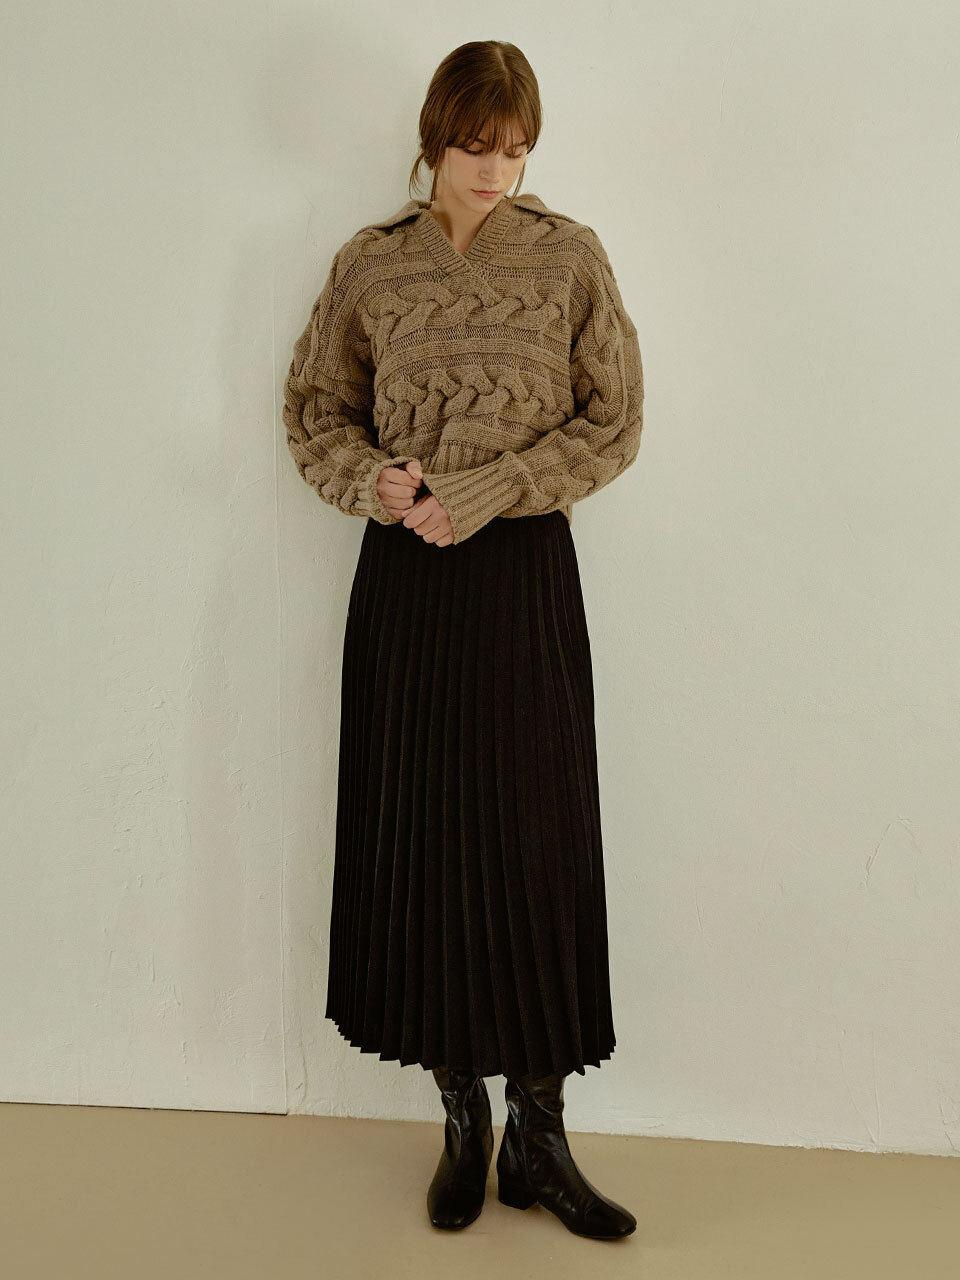 Cherish pleats long skirt (black)